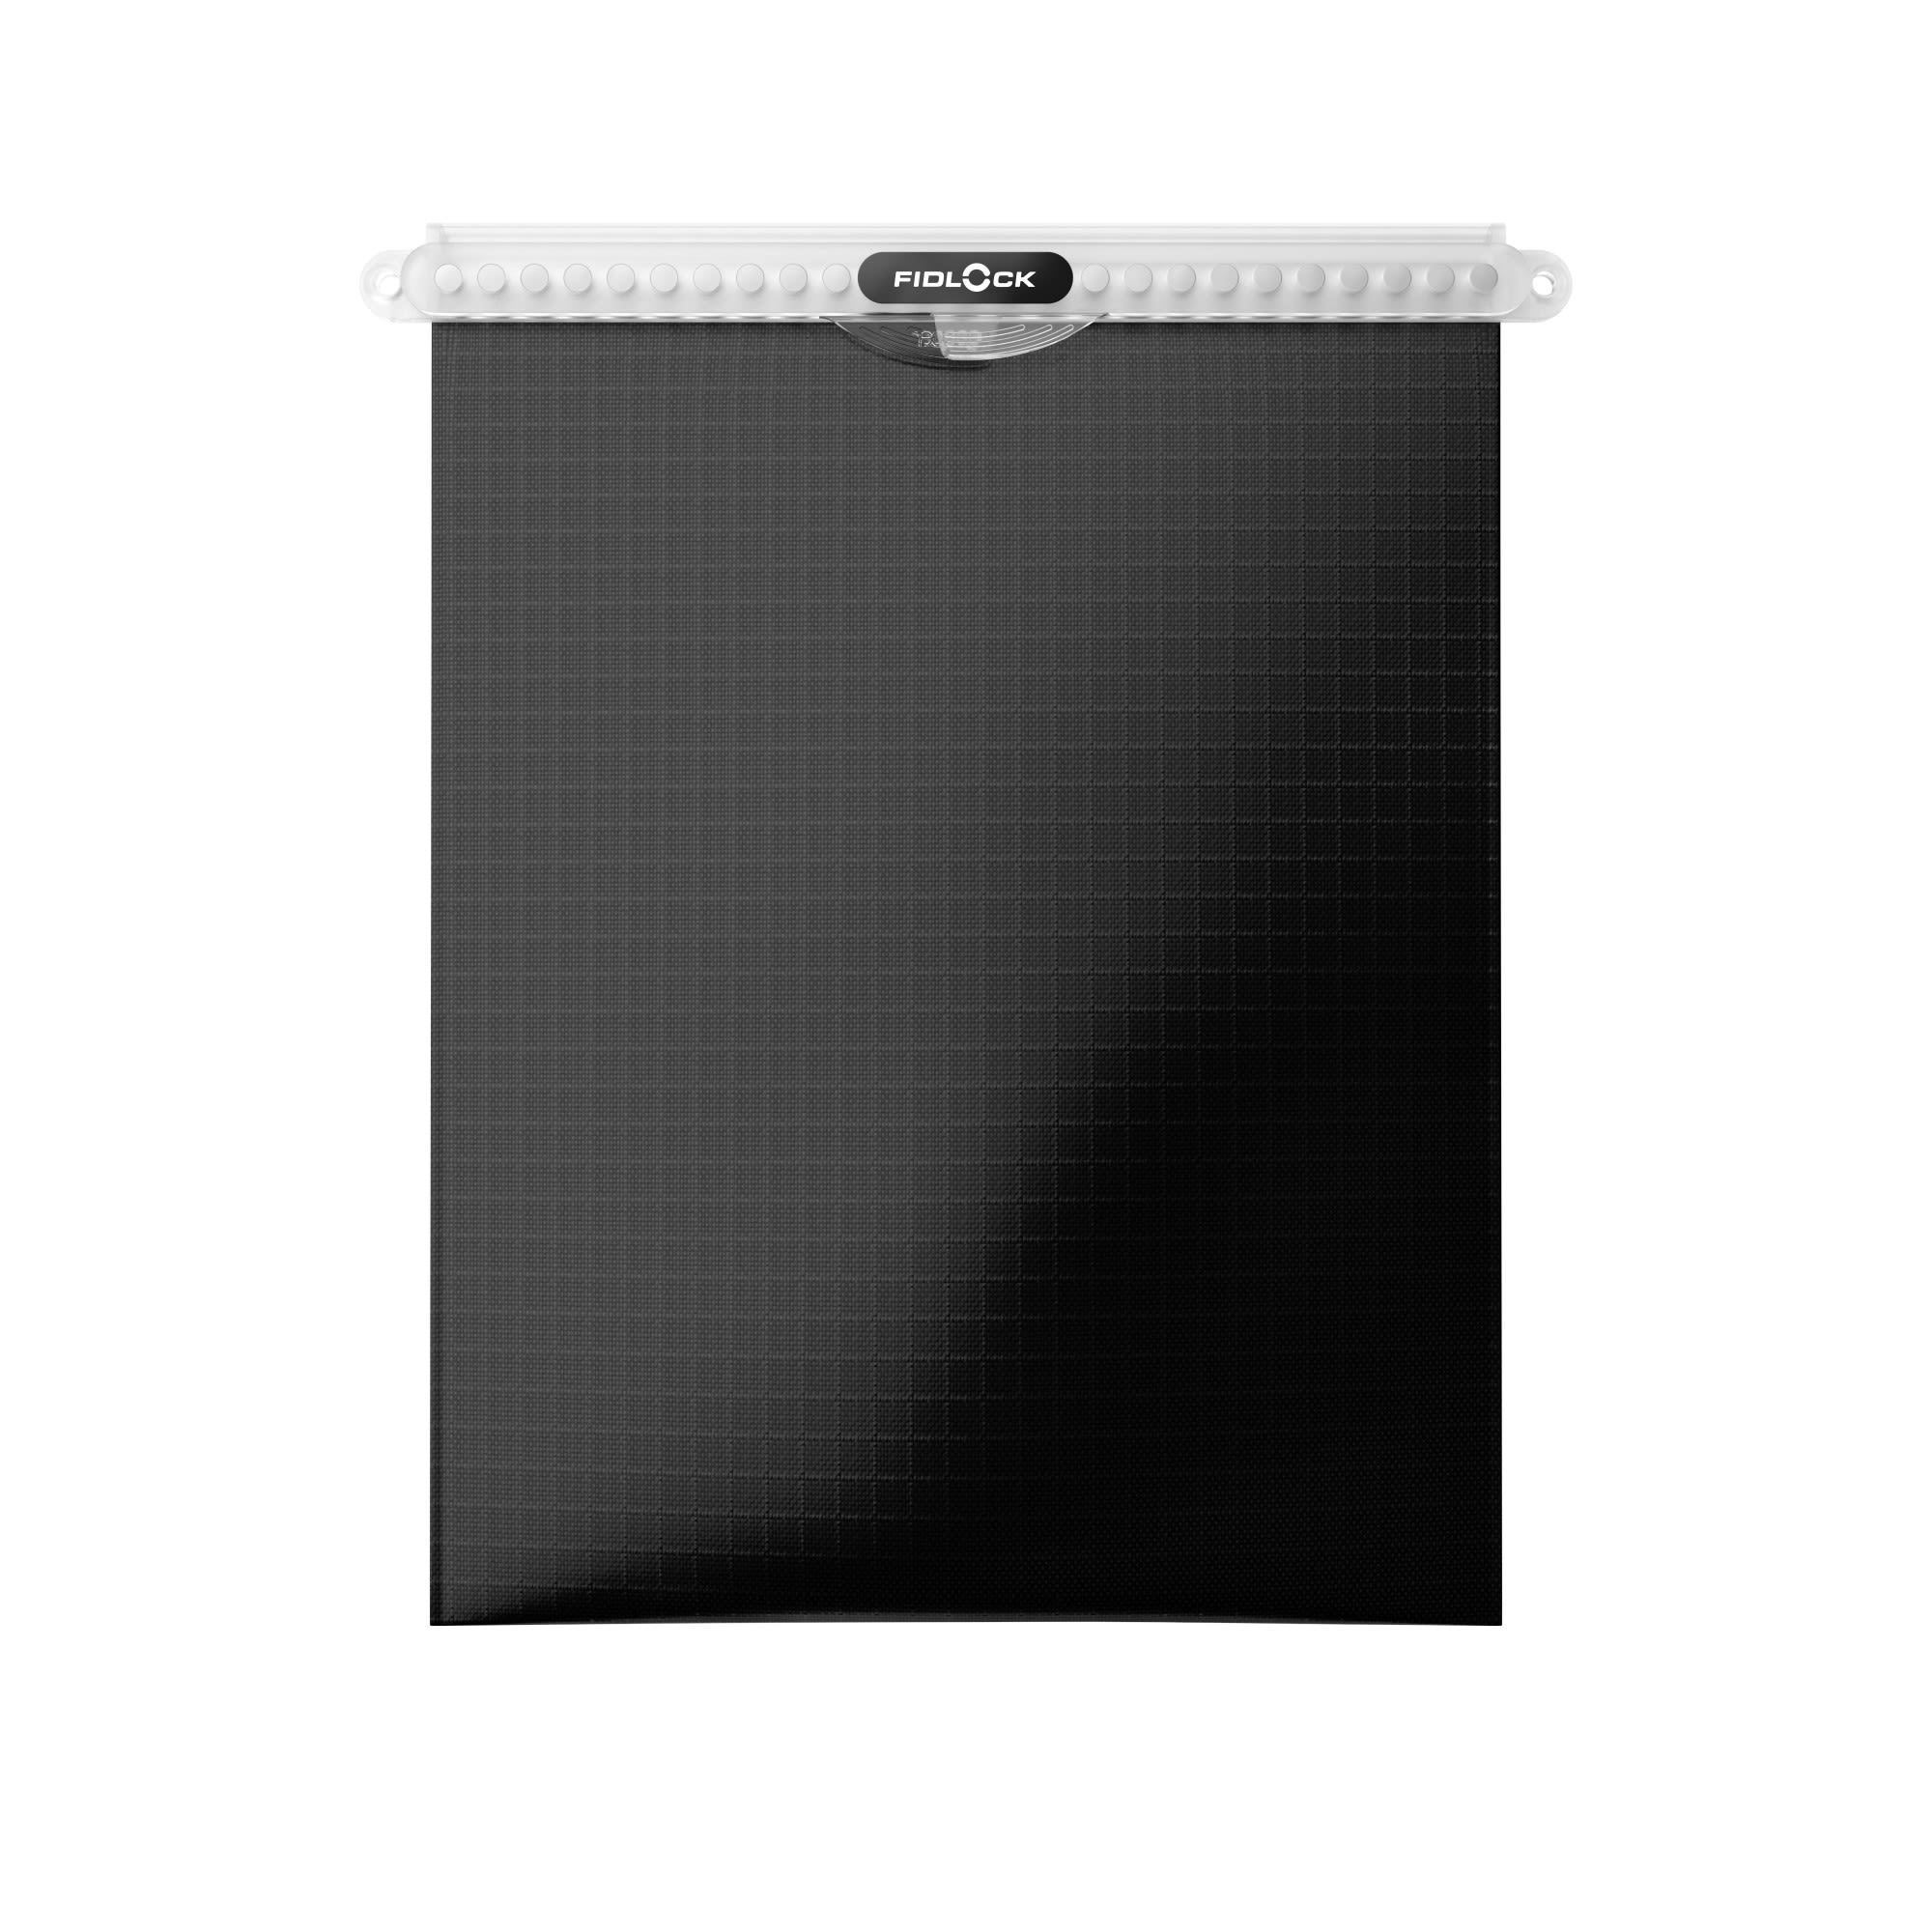 Fidlock Hermetic Drybag Mega Fabric Schwarz- Drybags- Grsse One Size - Farbe Transparent - Black Fabric - Black Fabric